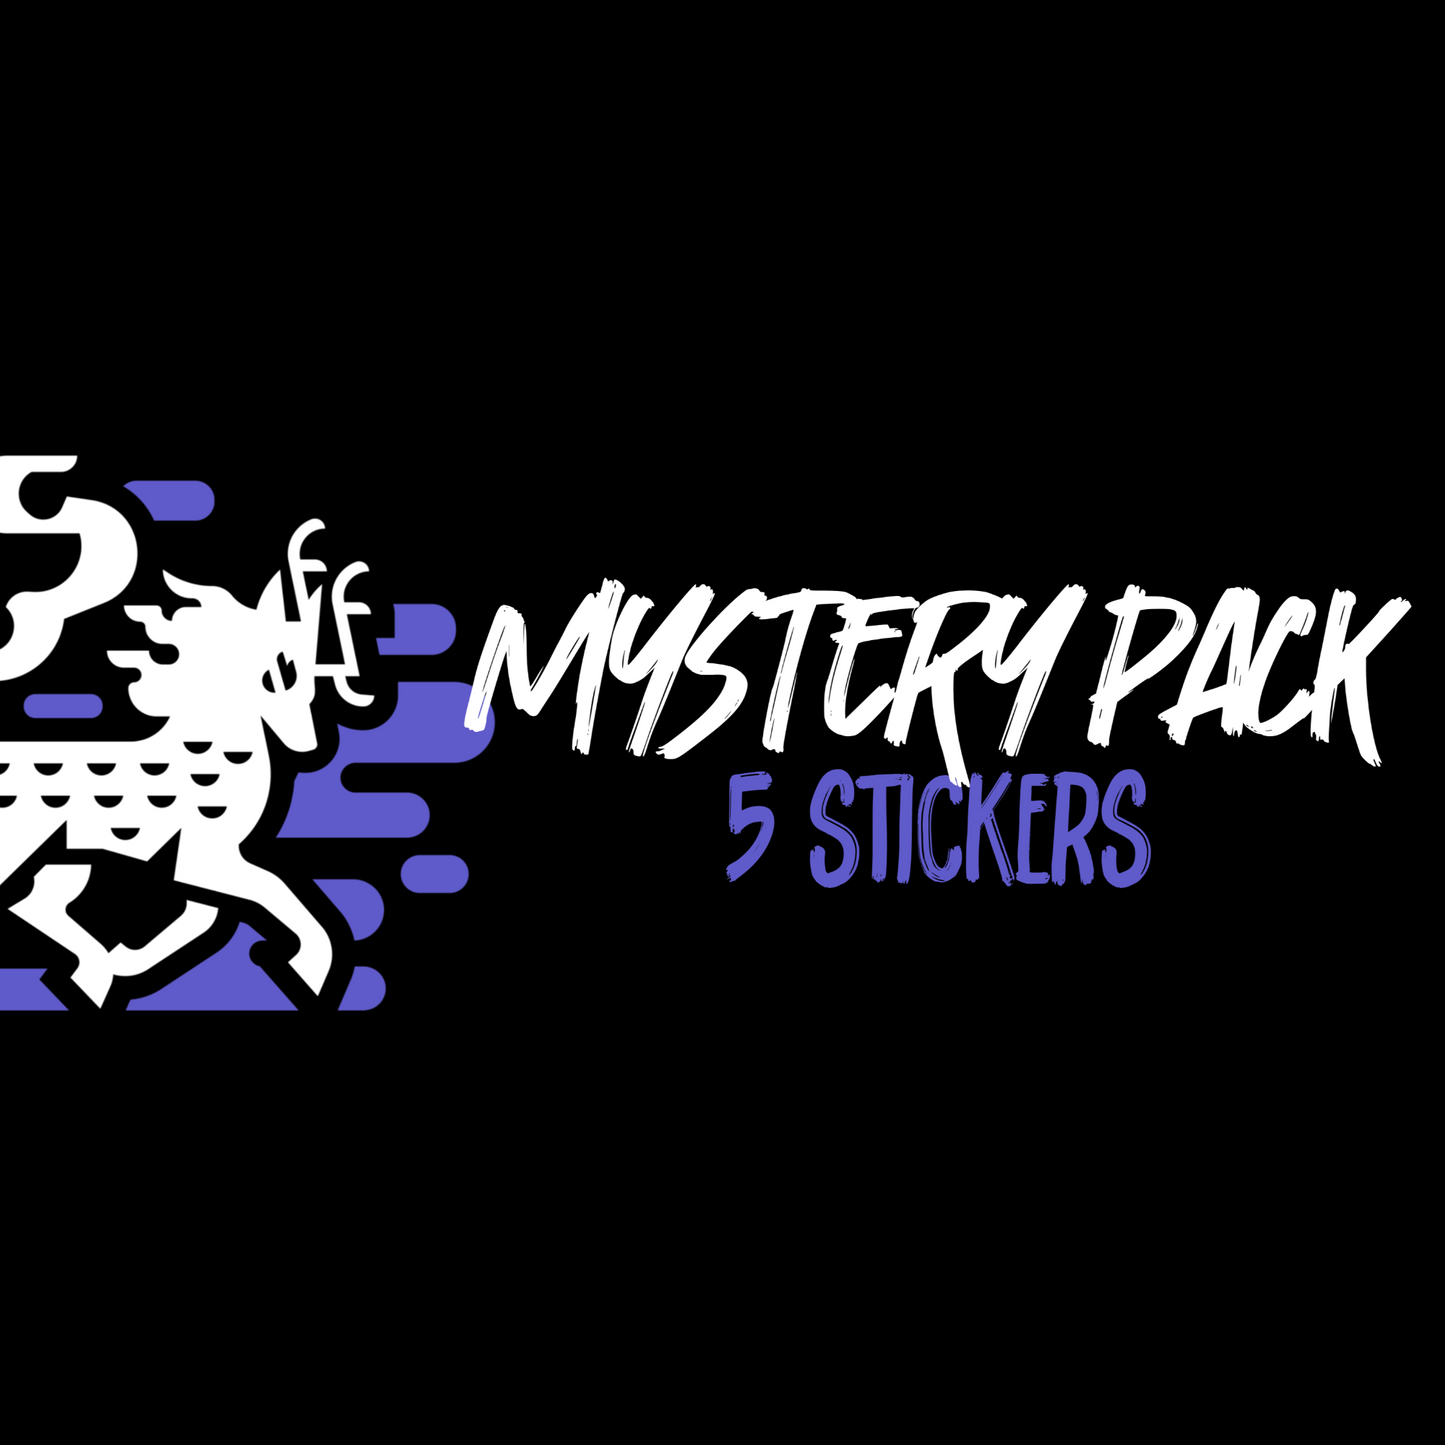 Mystery sticker pack!